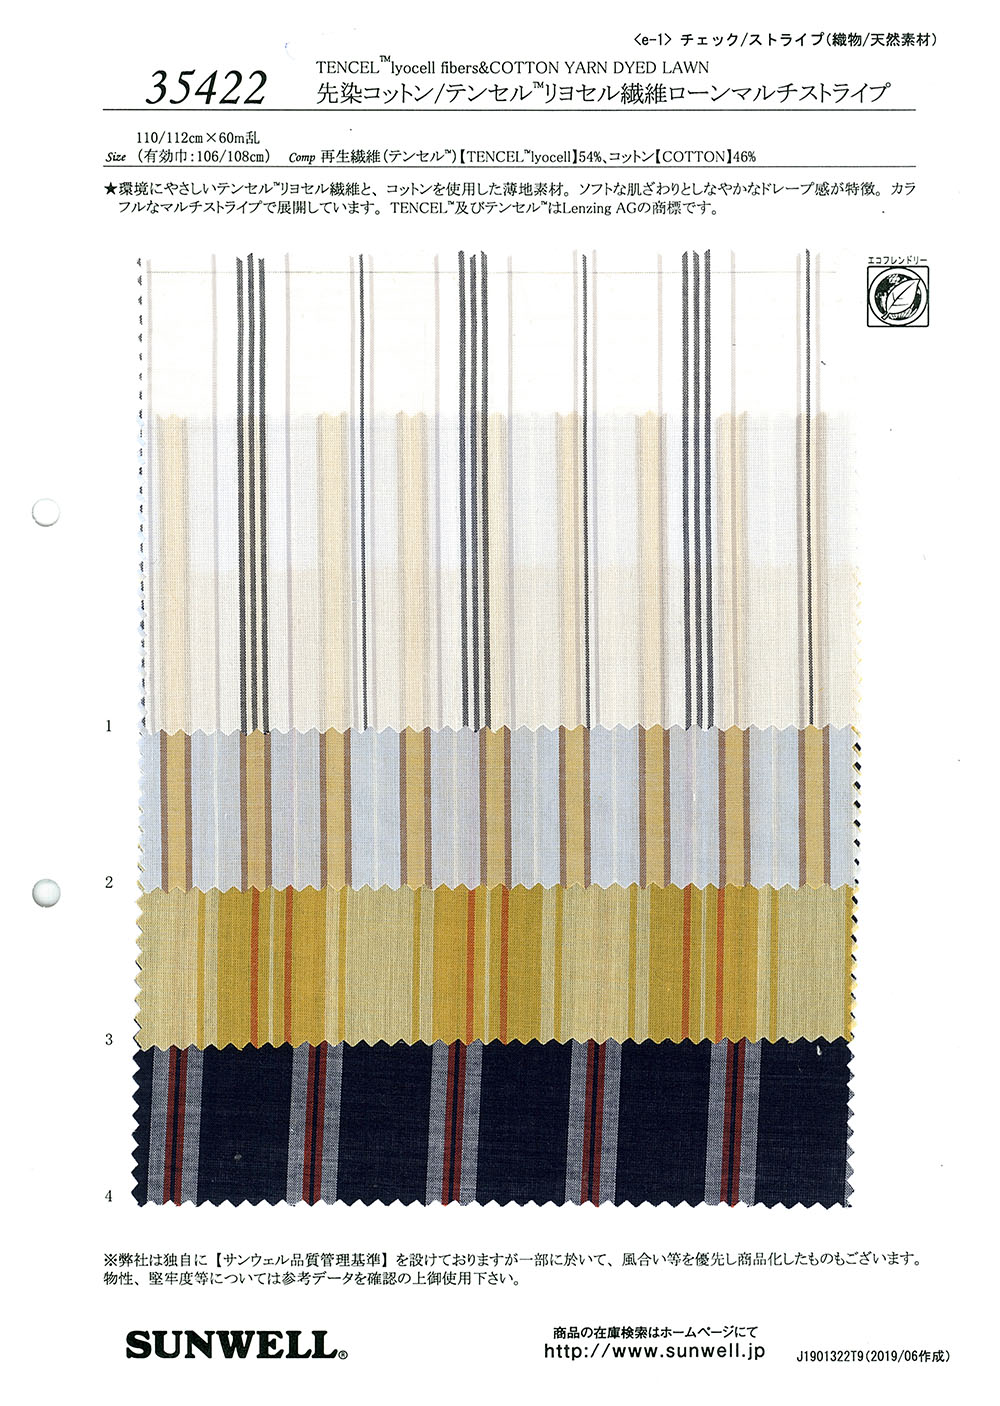 35422 Coton Teint En Fil / Tencel (TM) Lyocell Fiber Lawn Multi-rayures[Fabrication De Textile] SUNWELL